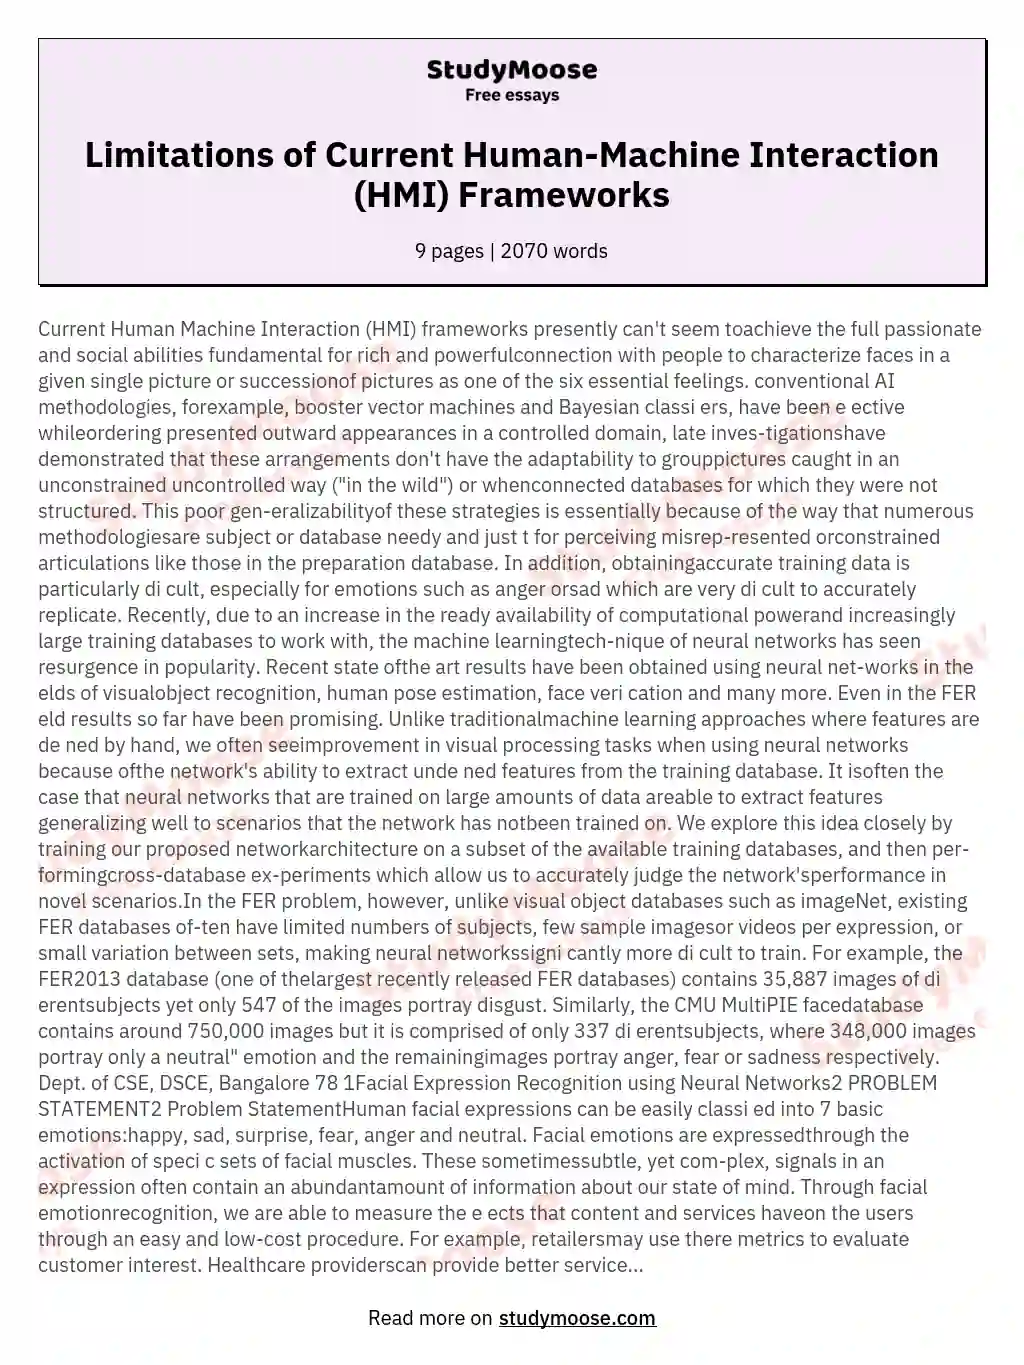 Limitations of Current Human-Machine Interaction (HMI) Frameworks essay